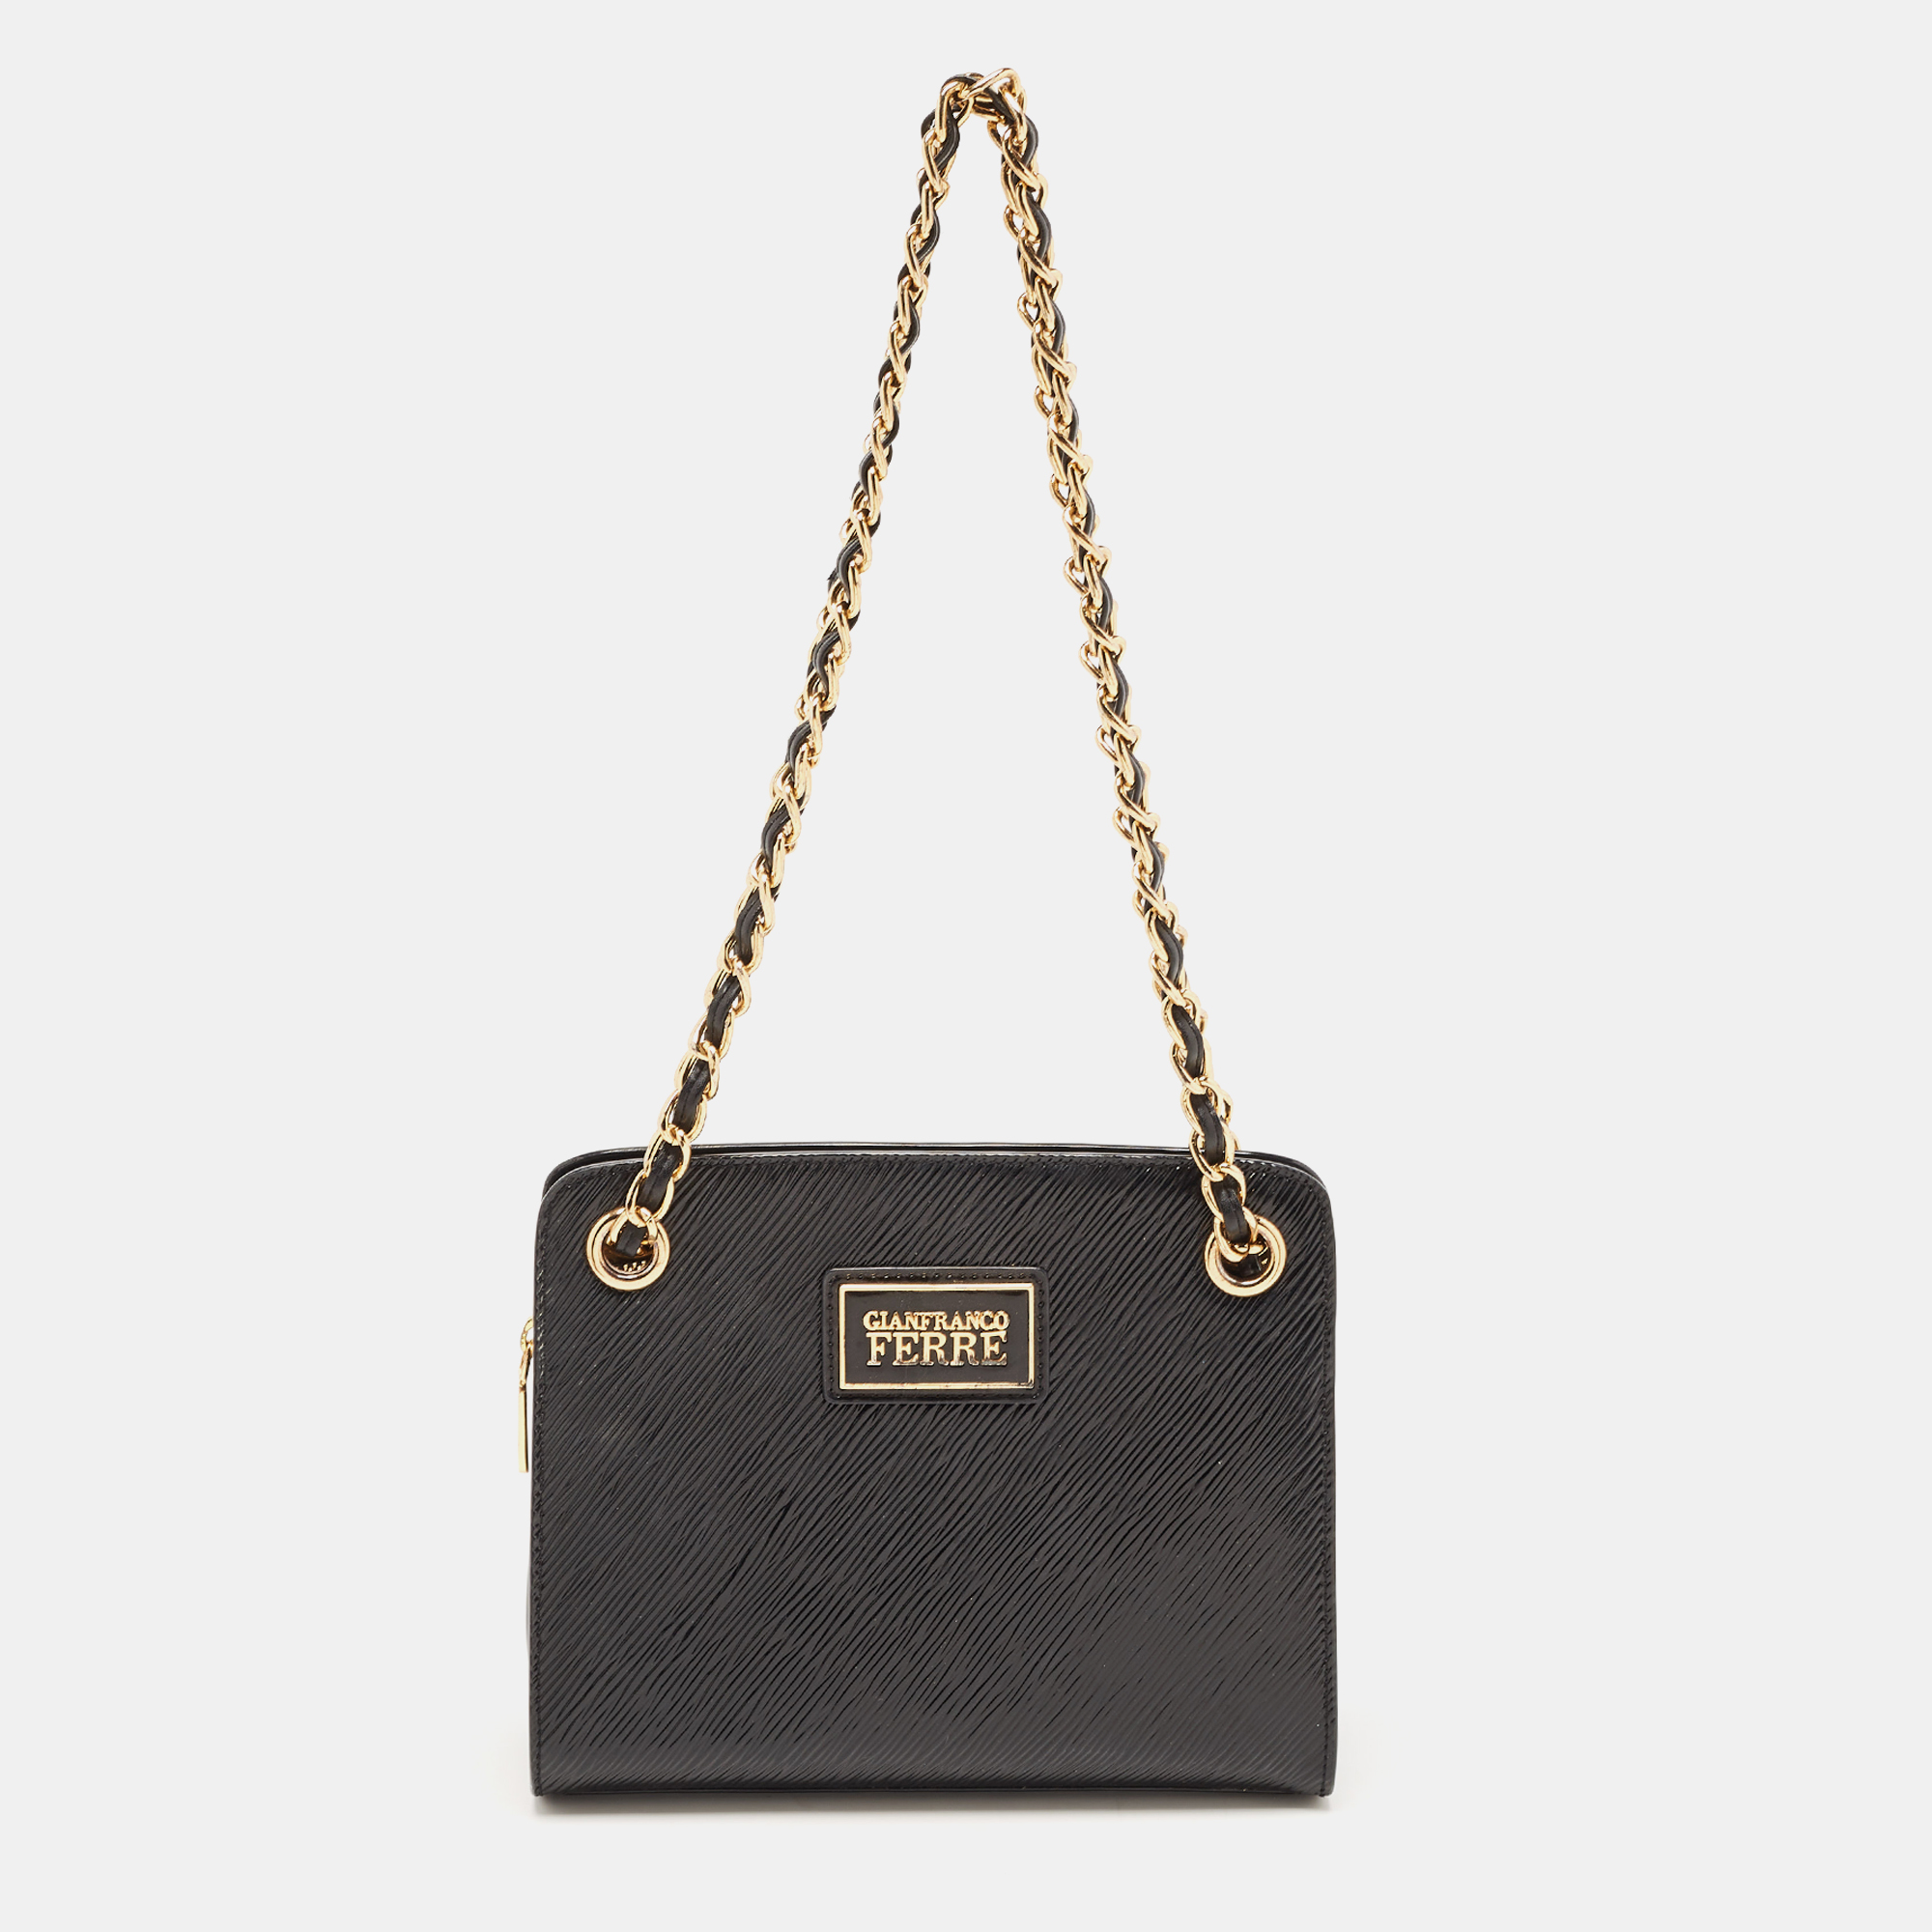 

Gianfranco Ferre Black Patent Leather Chain Shoulder Bag